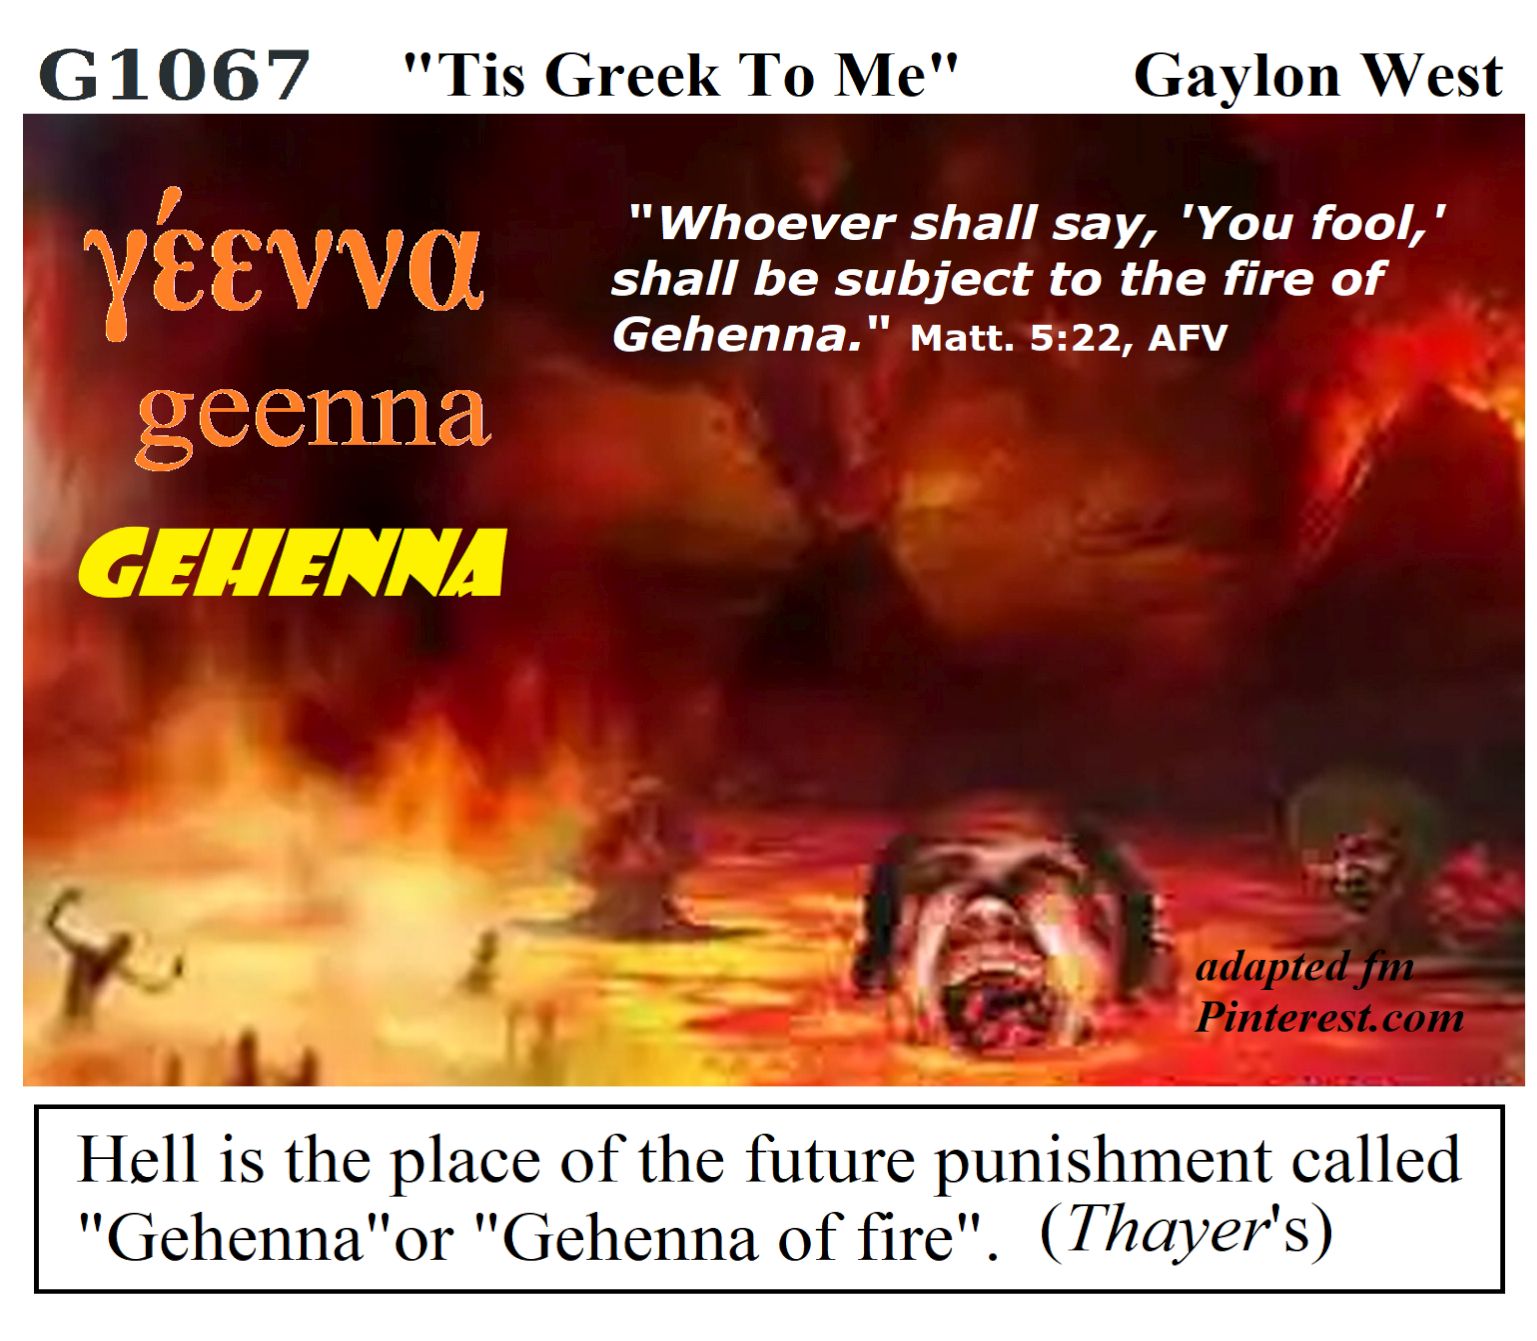  G1067 Gehenna illus., Eternal fire after resurrection